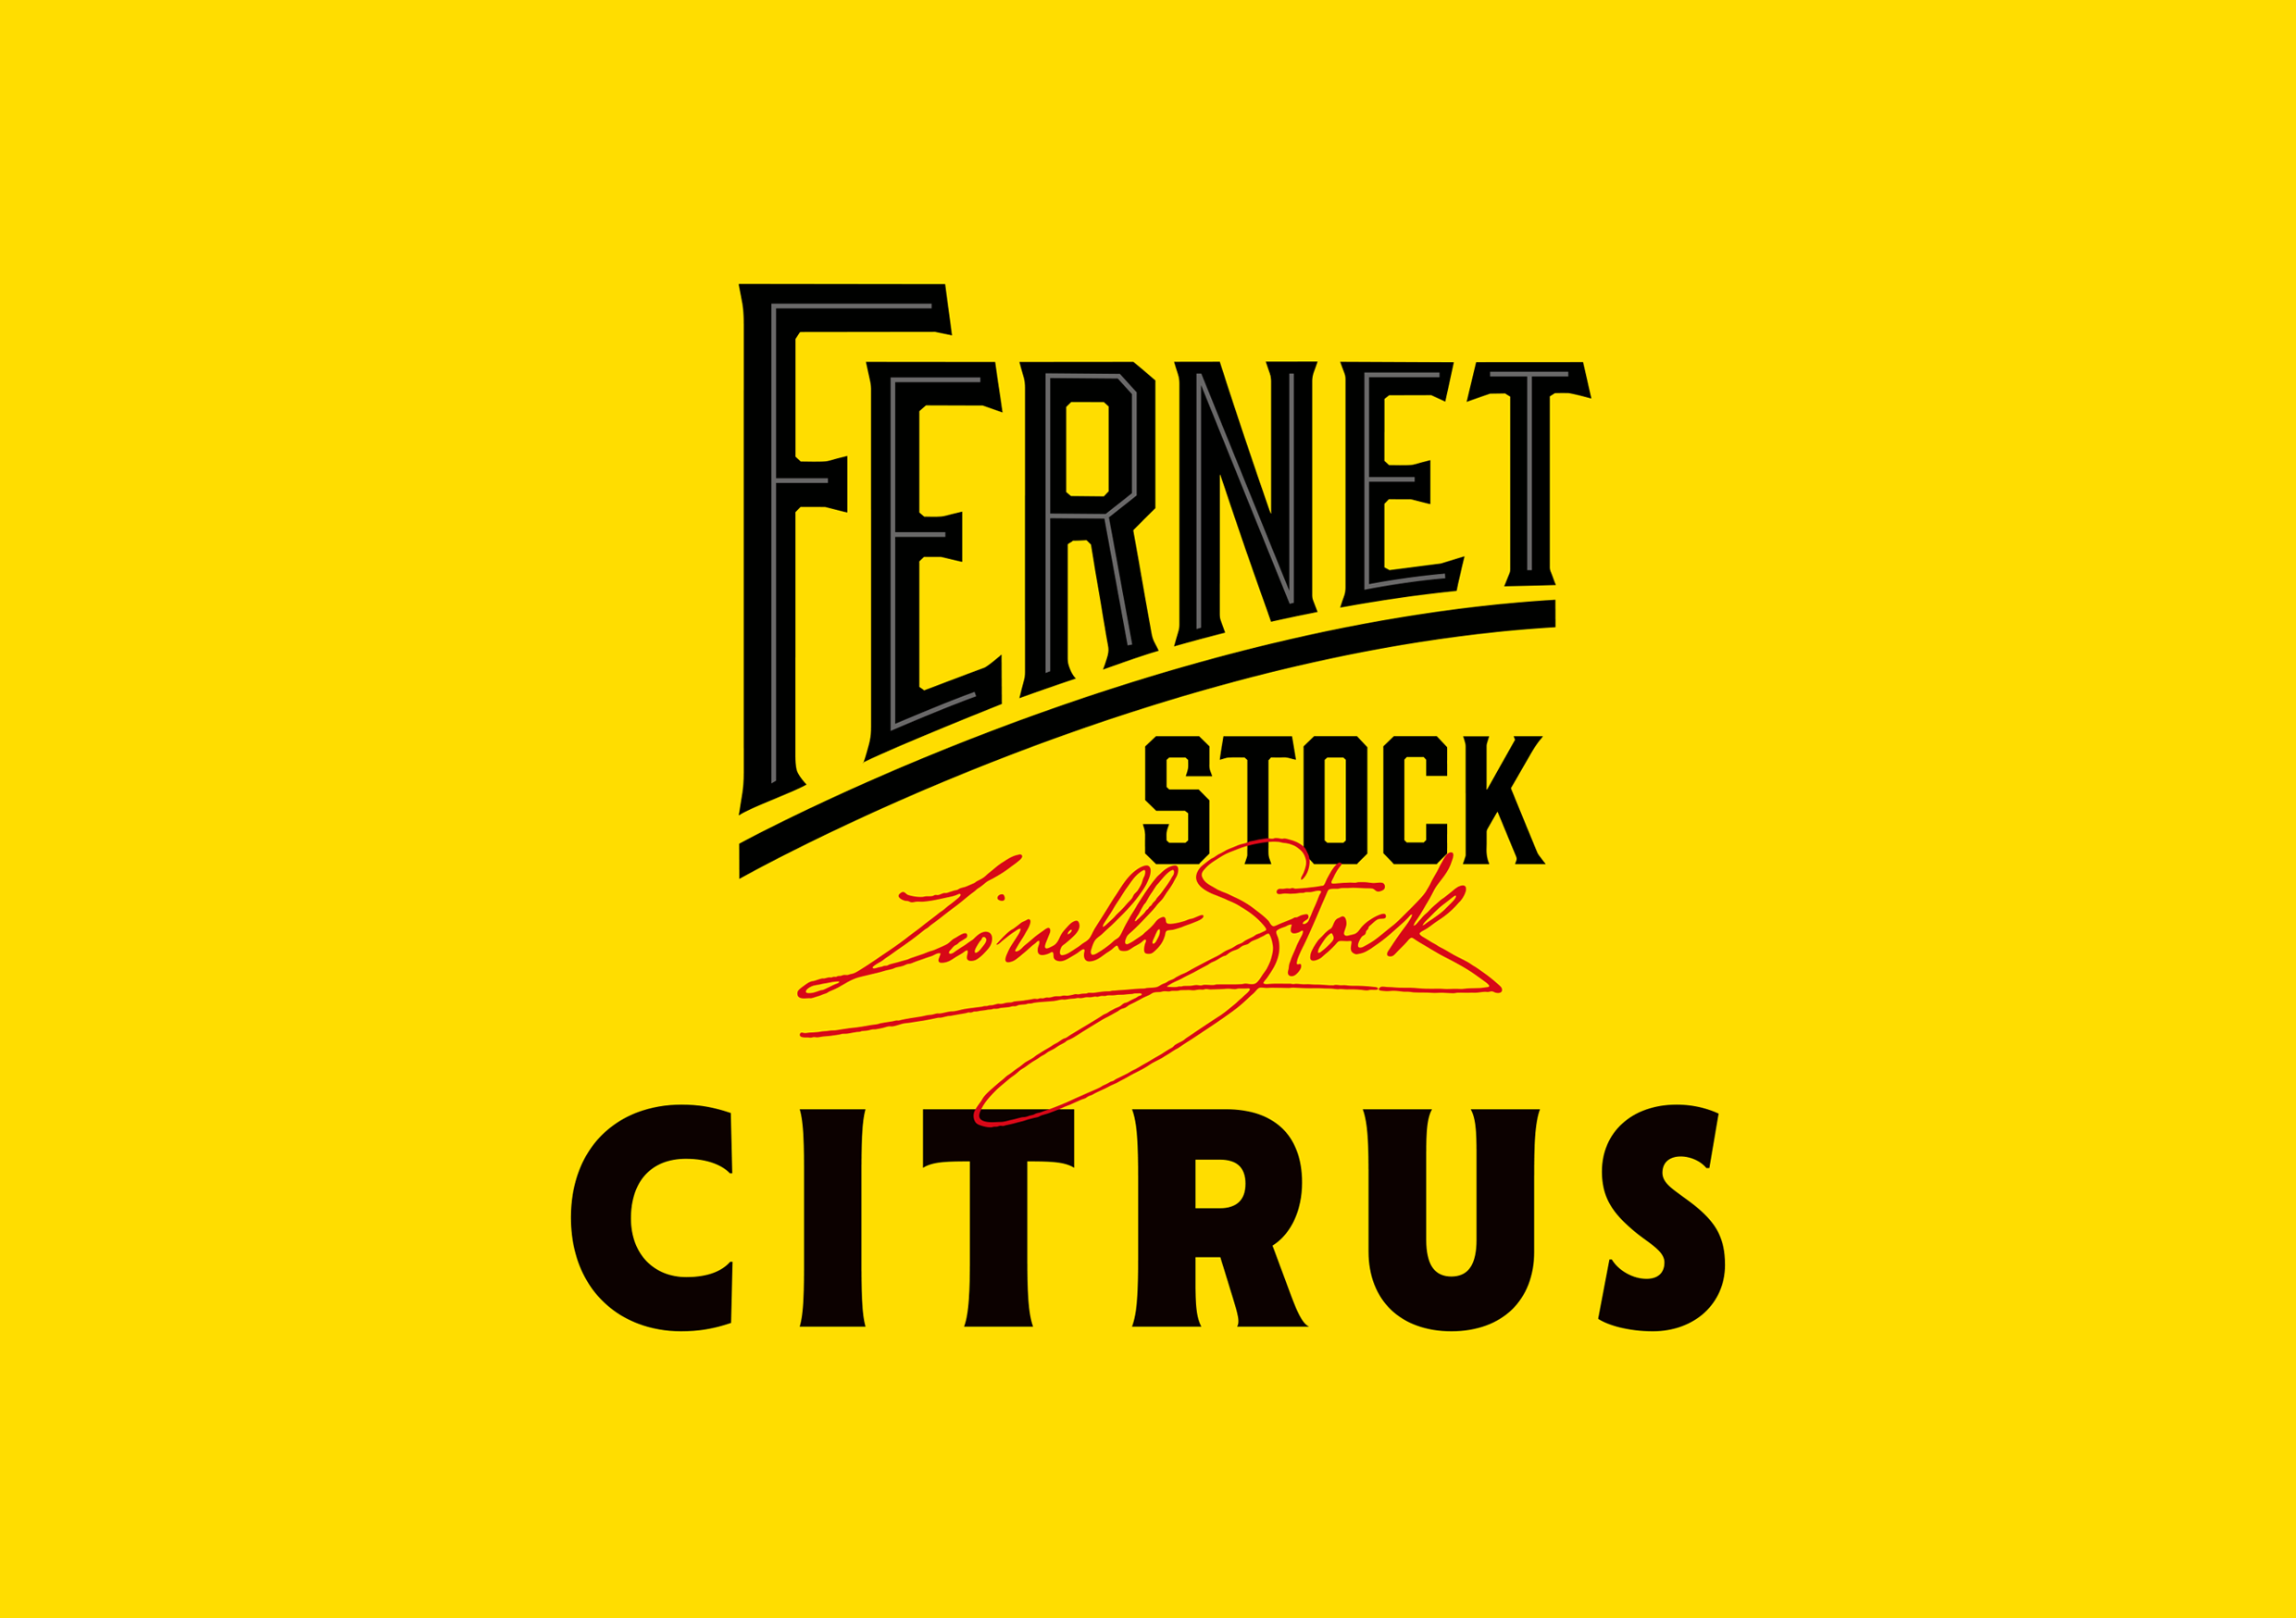 fernet_stock_citrus